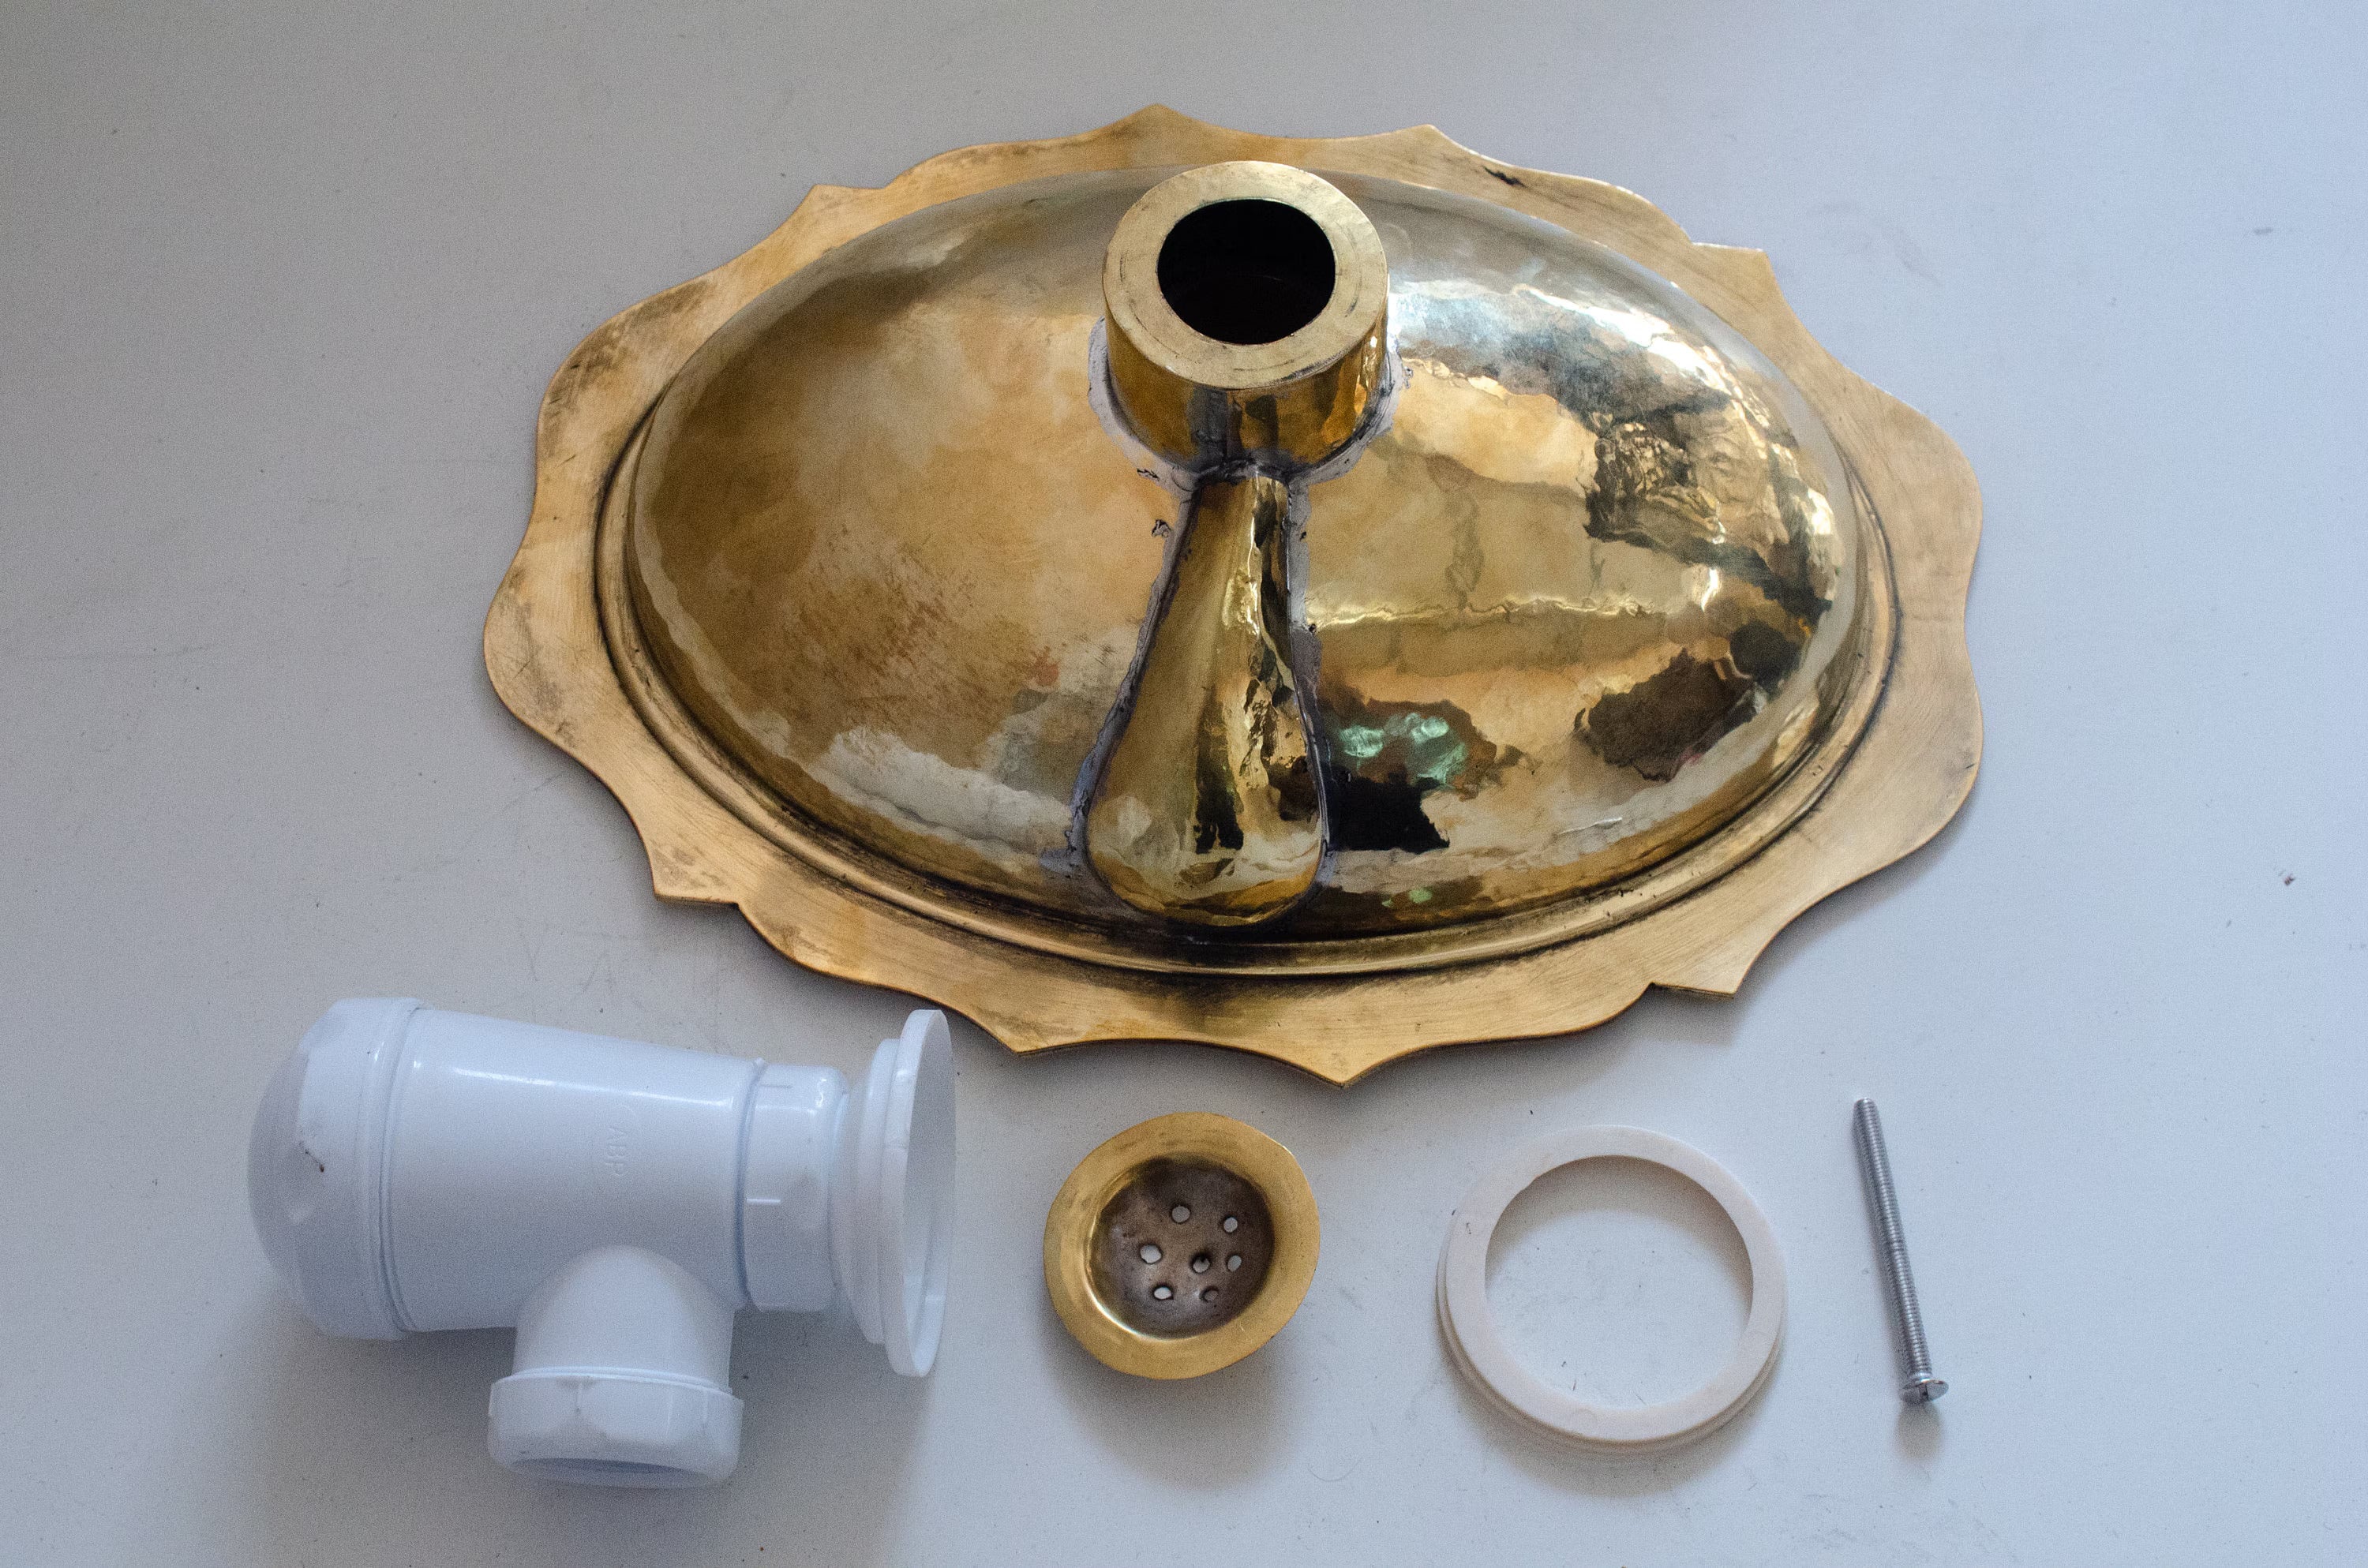 Antique Solid Brass Sink, Unlacquered Exposed Oval Bathroom Sink, Bathroom Vessel sink